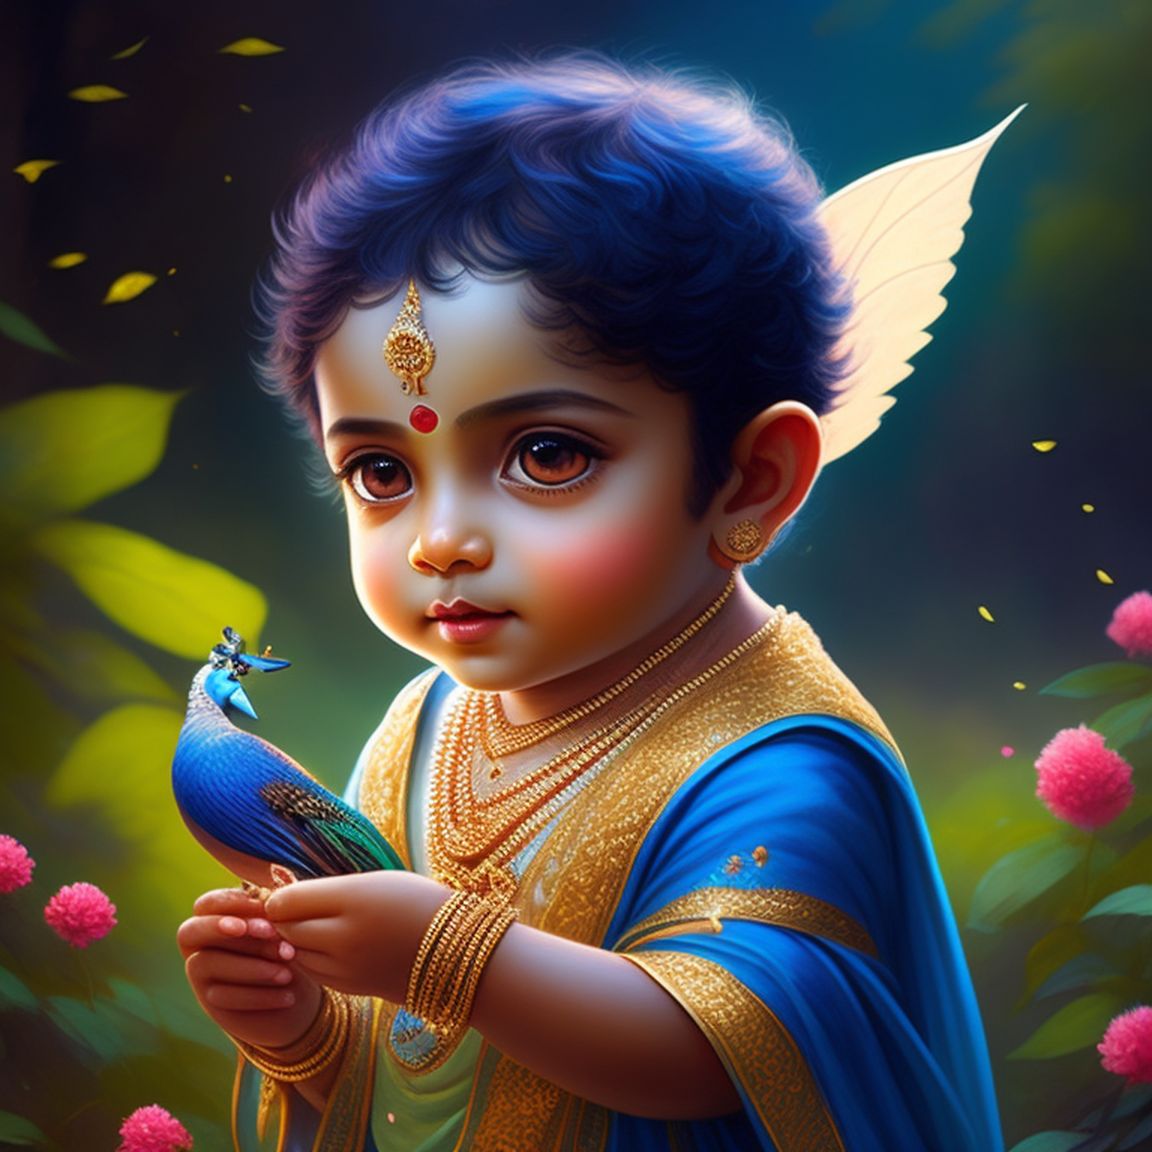 gigantic-fox28: Krishna boy have blue skin, in beautiful forest ...